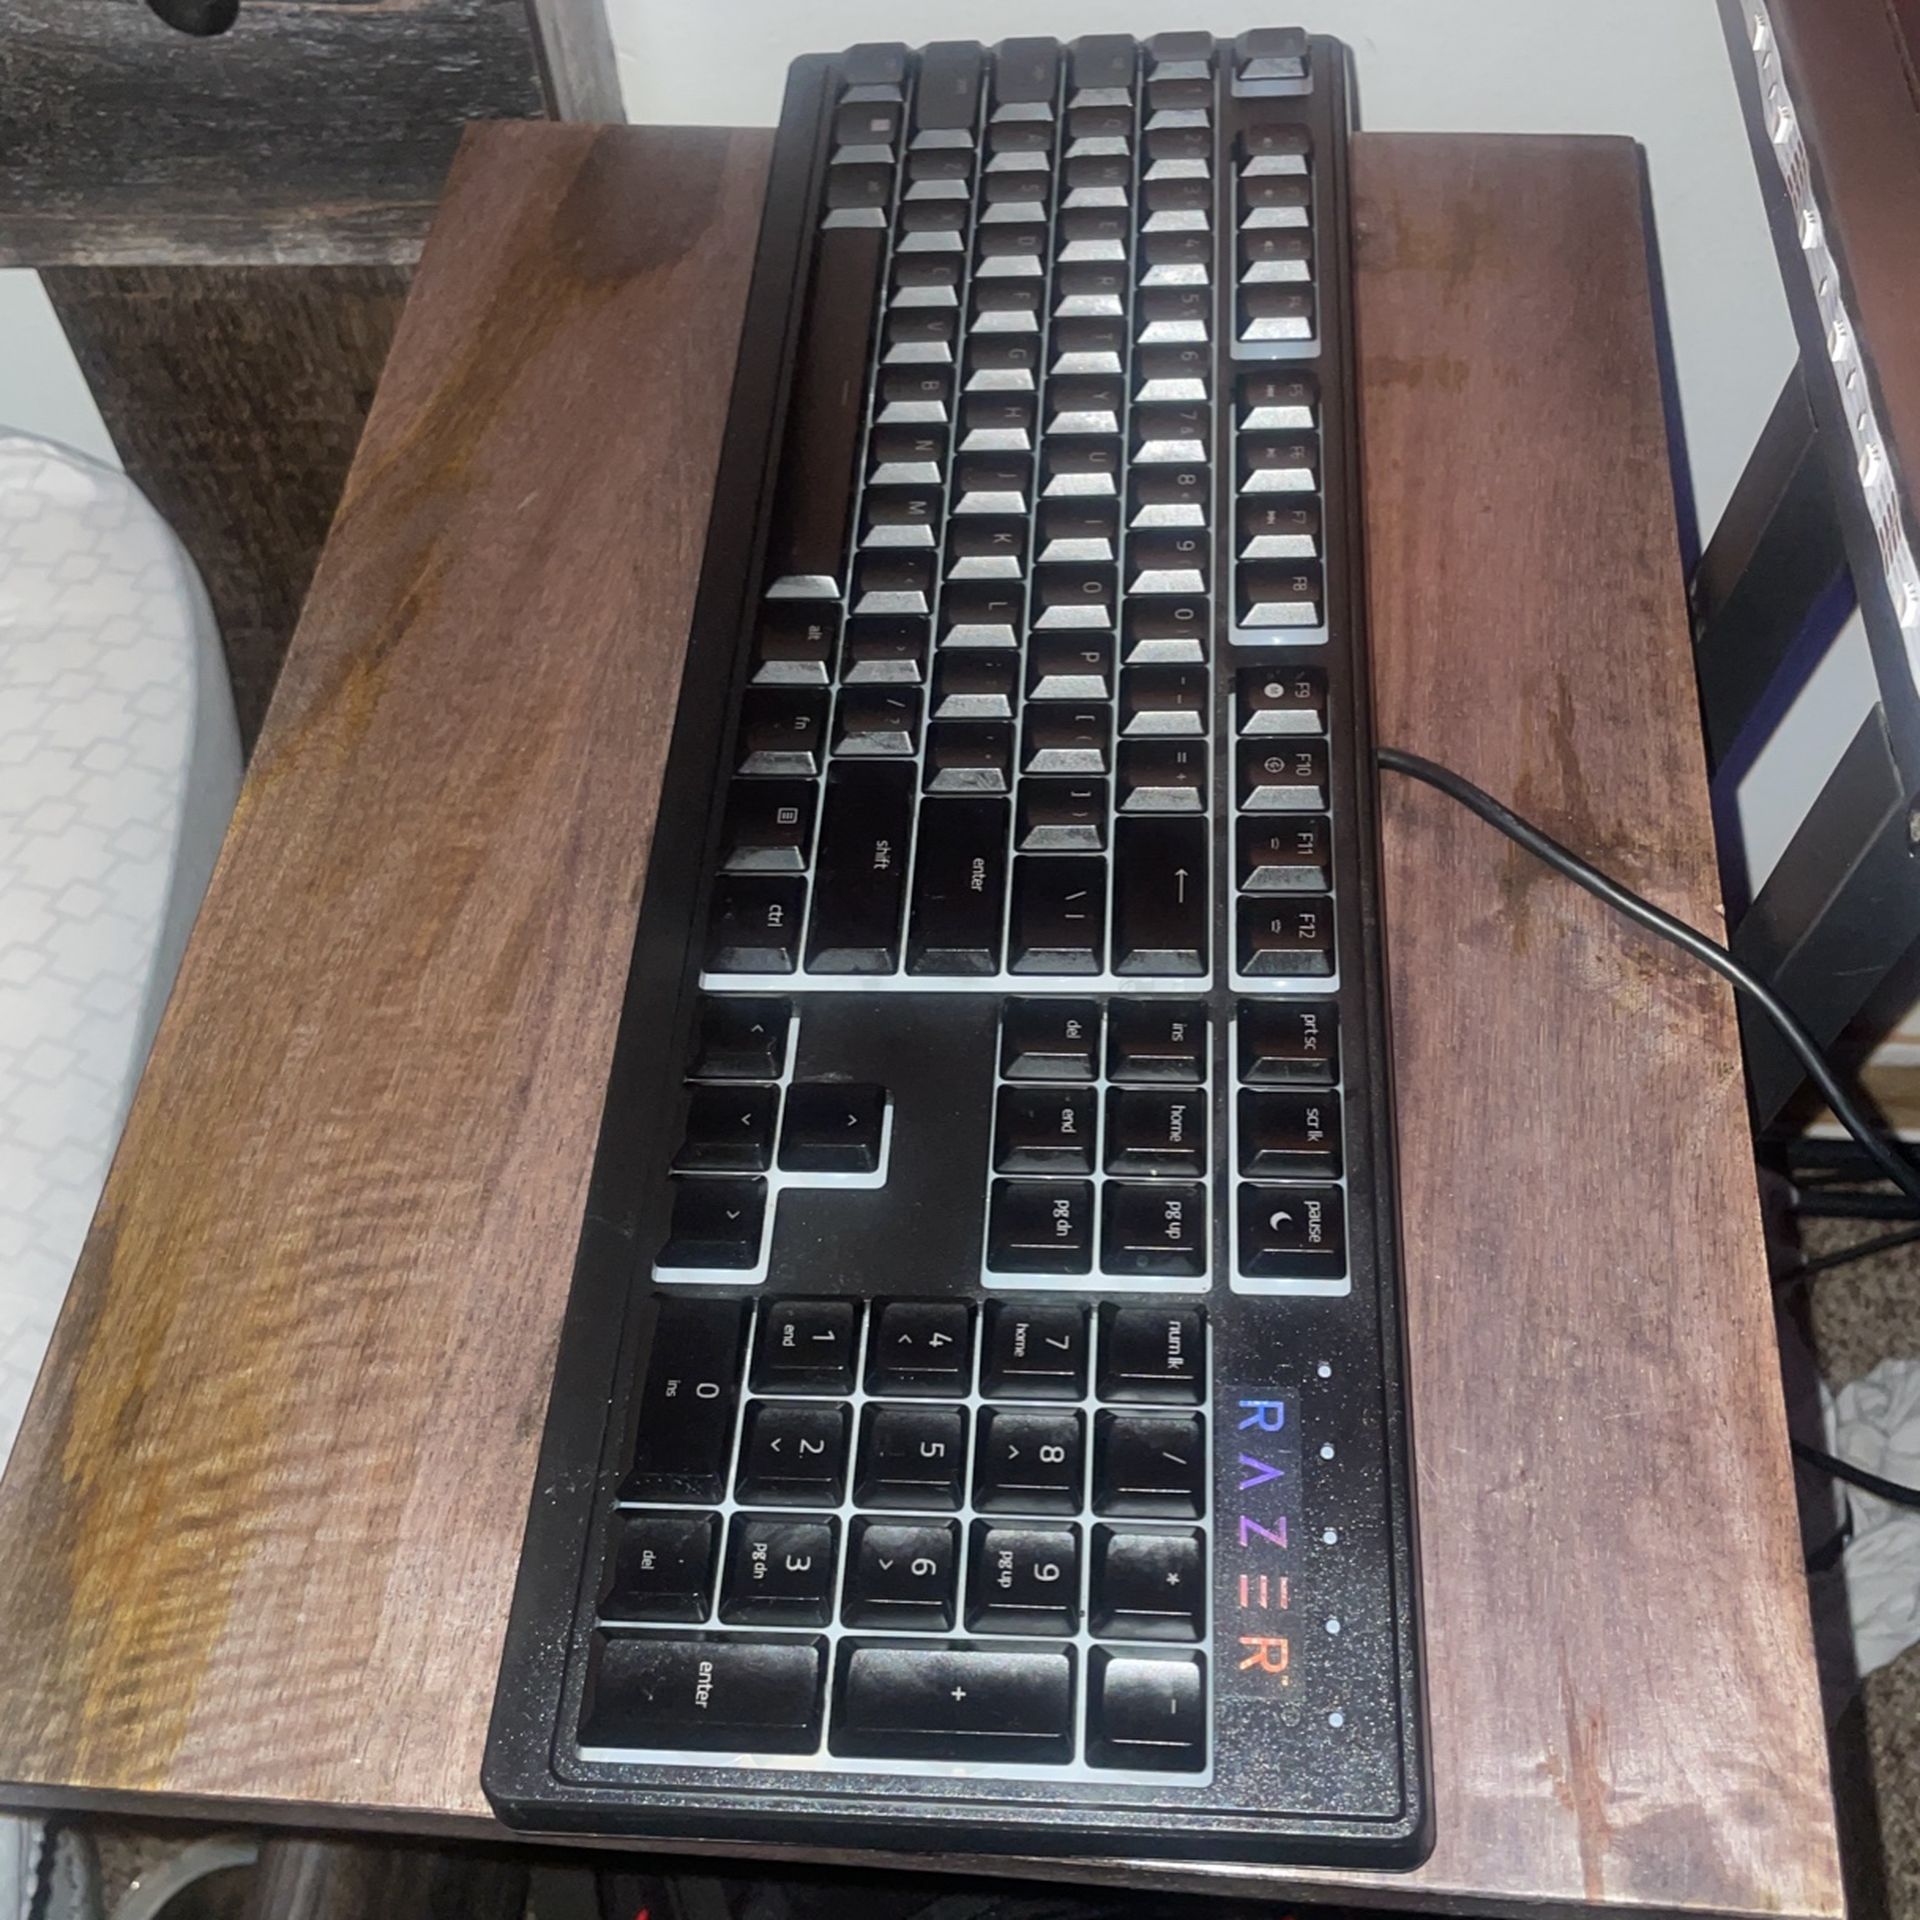 Keyboard 100$